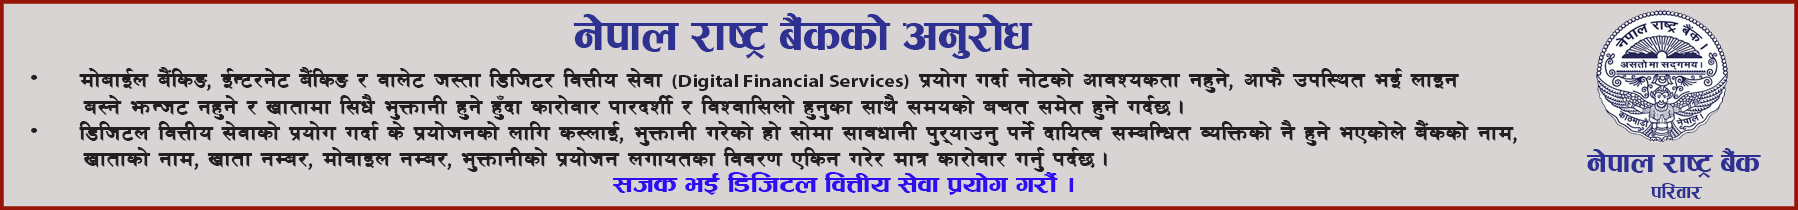 nepal rastra bank aniversary